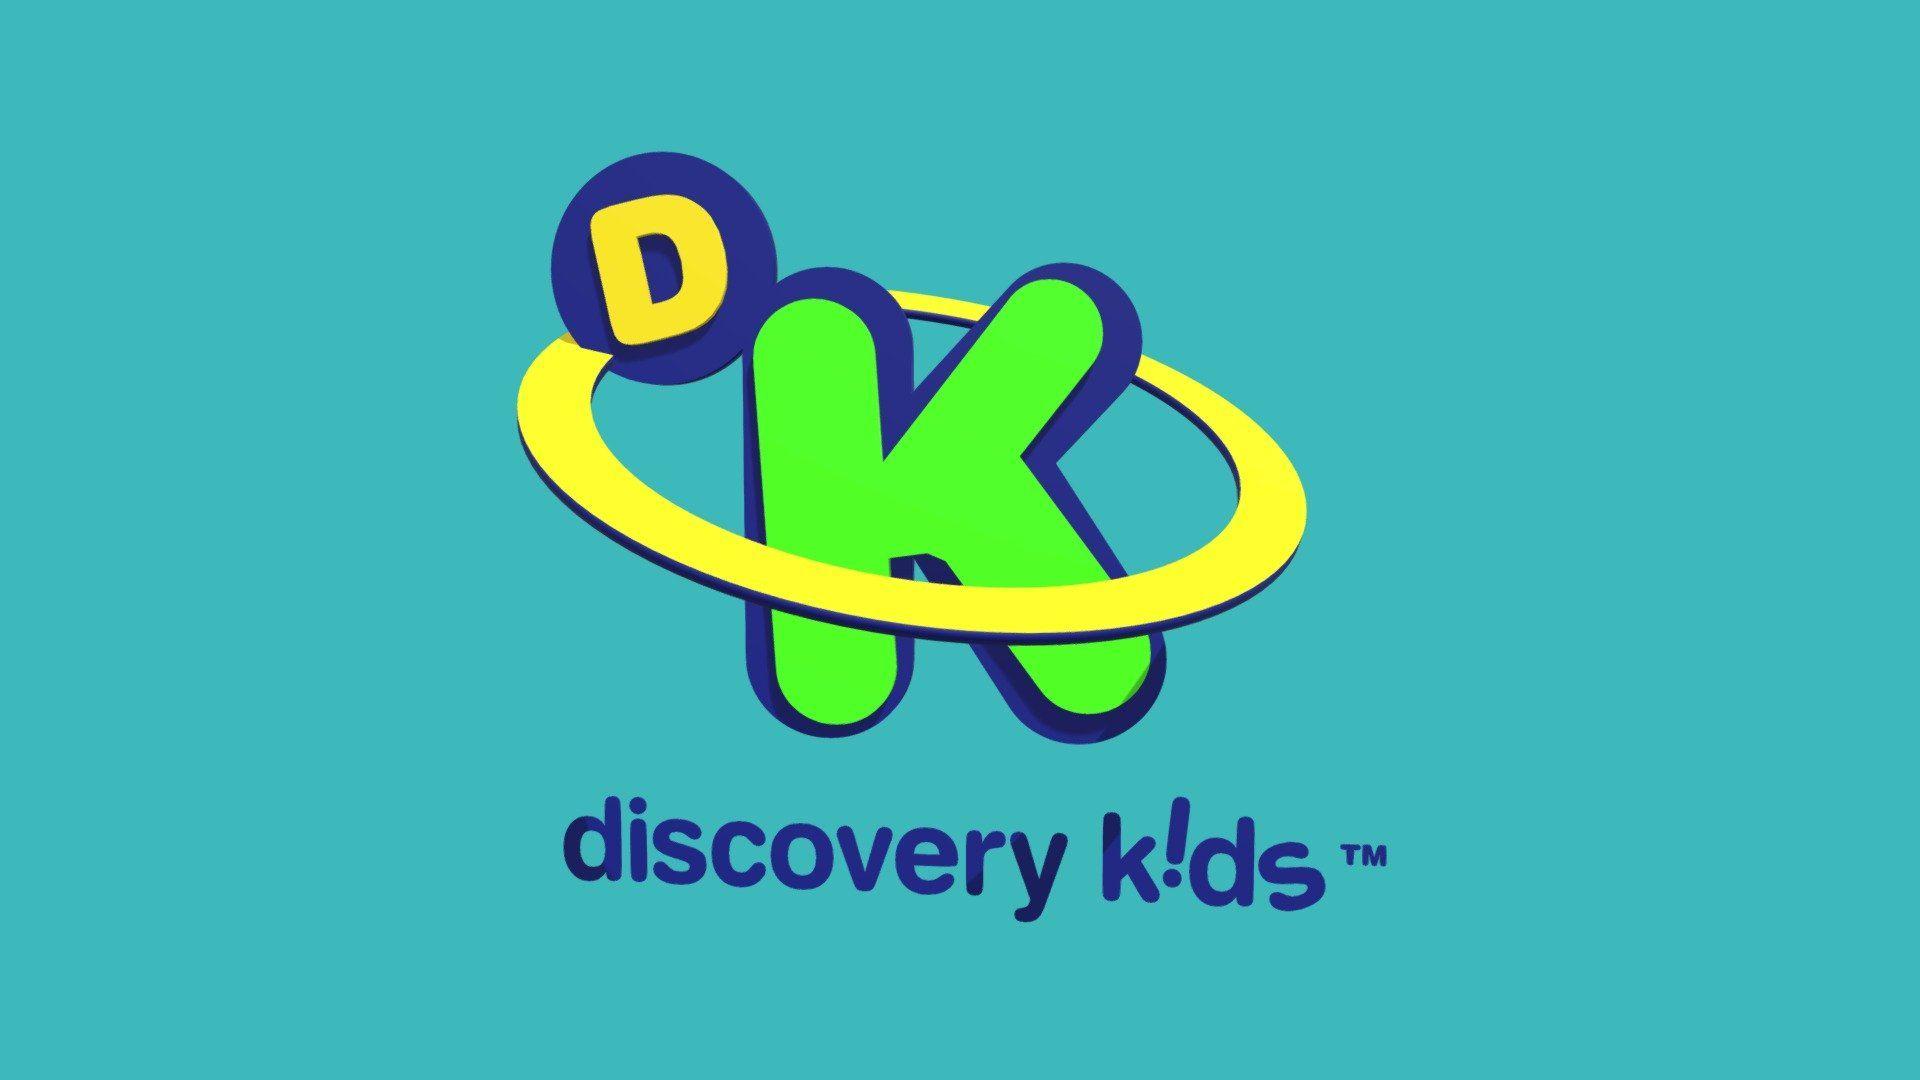 Discovery Kids Logo - Discovery Kids Logo 2009 2016